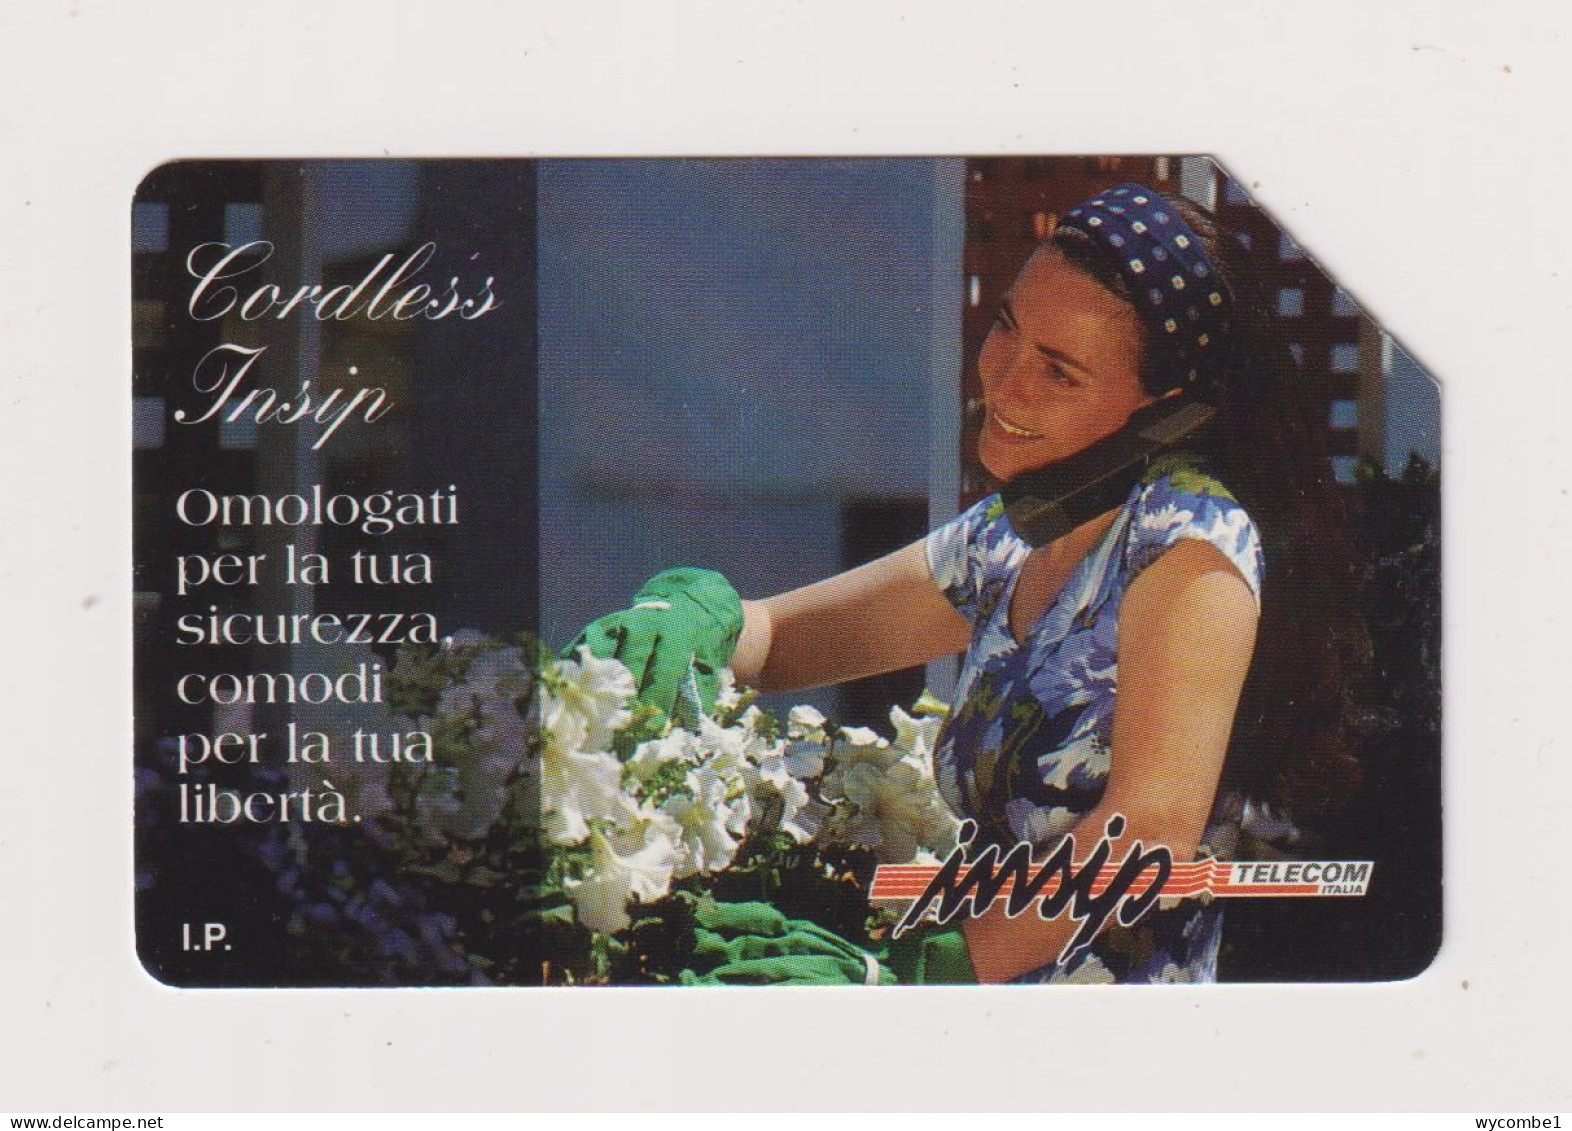 ITALY - Cordless Insip Urmet  Phonecard - Publiques Ordinaires